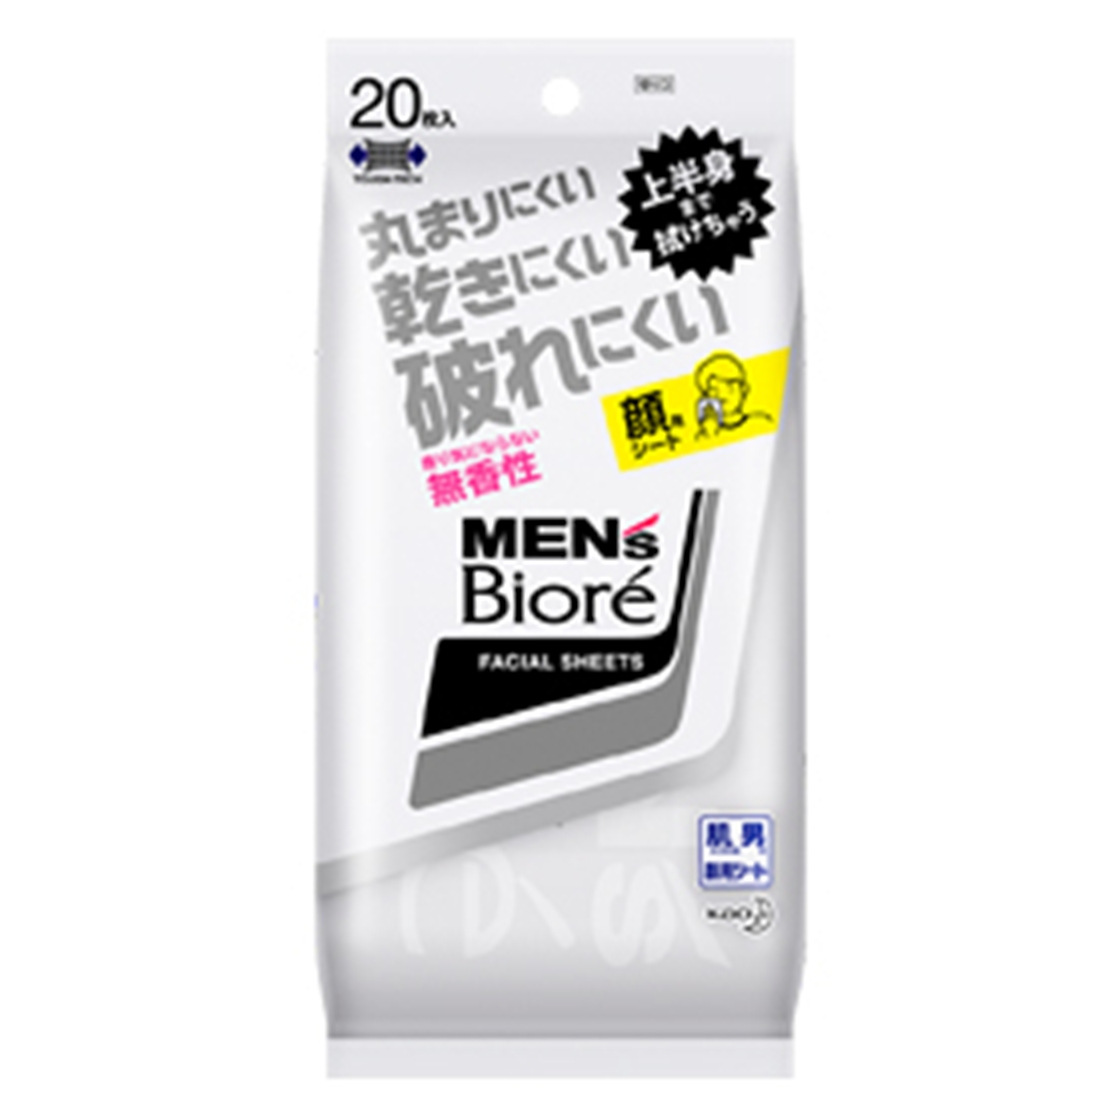 Men’s Biore Facial Sheets Fragrance Free